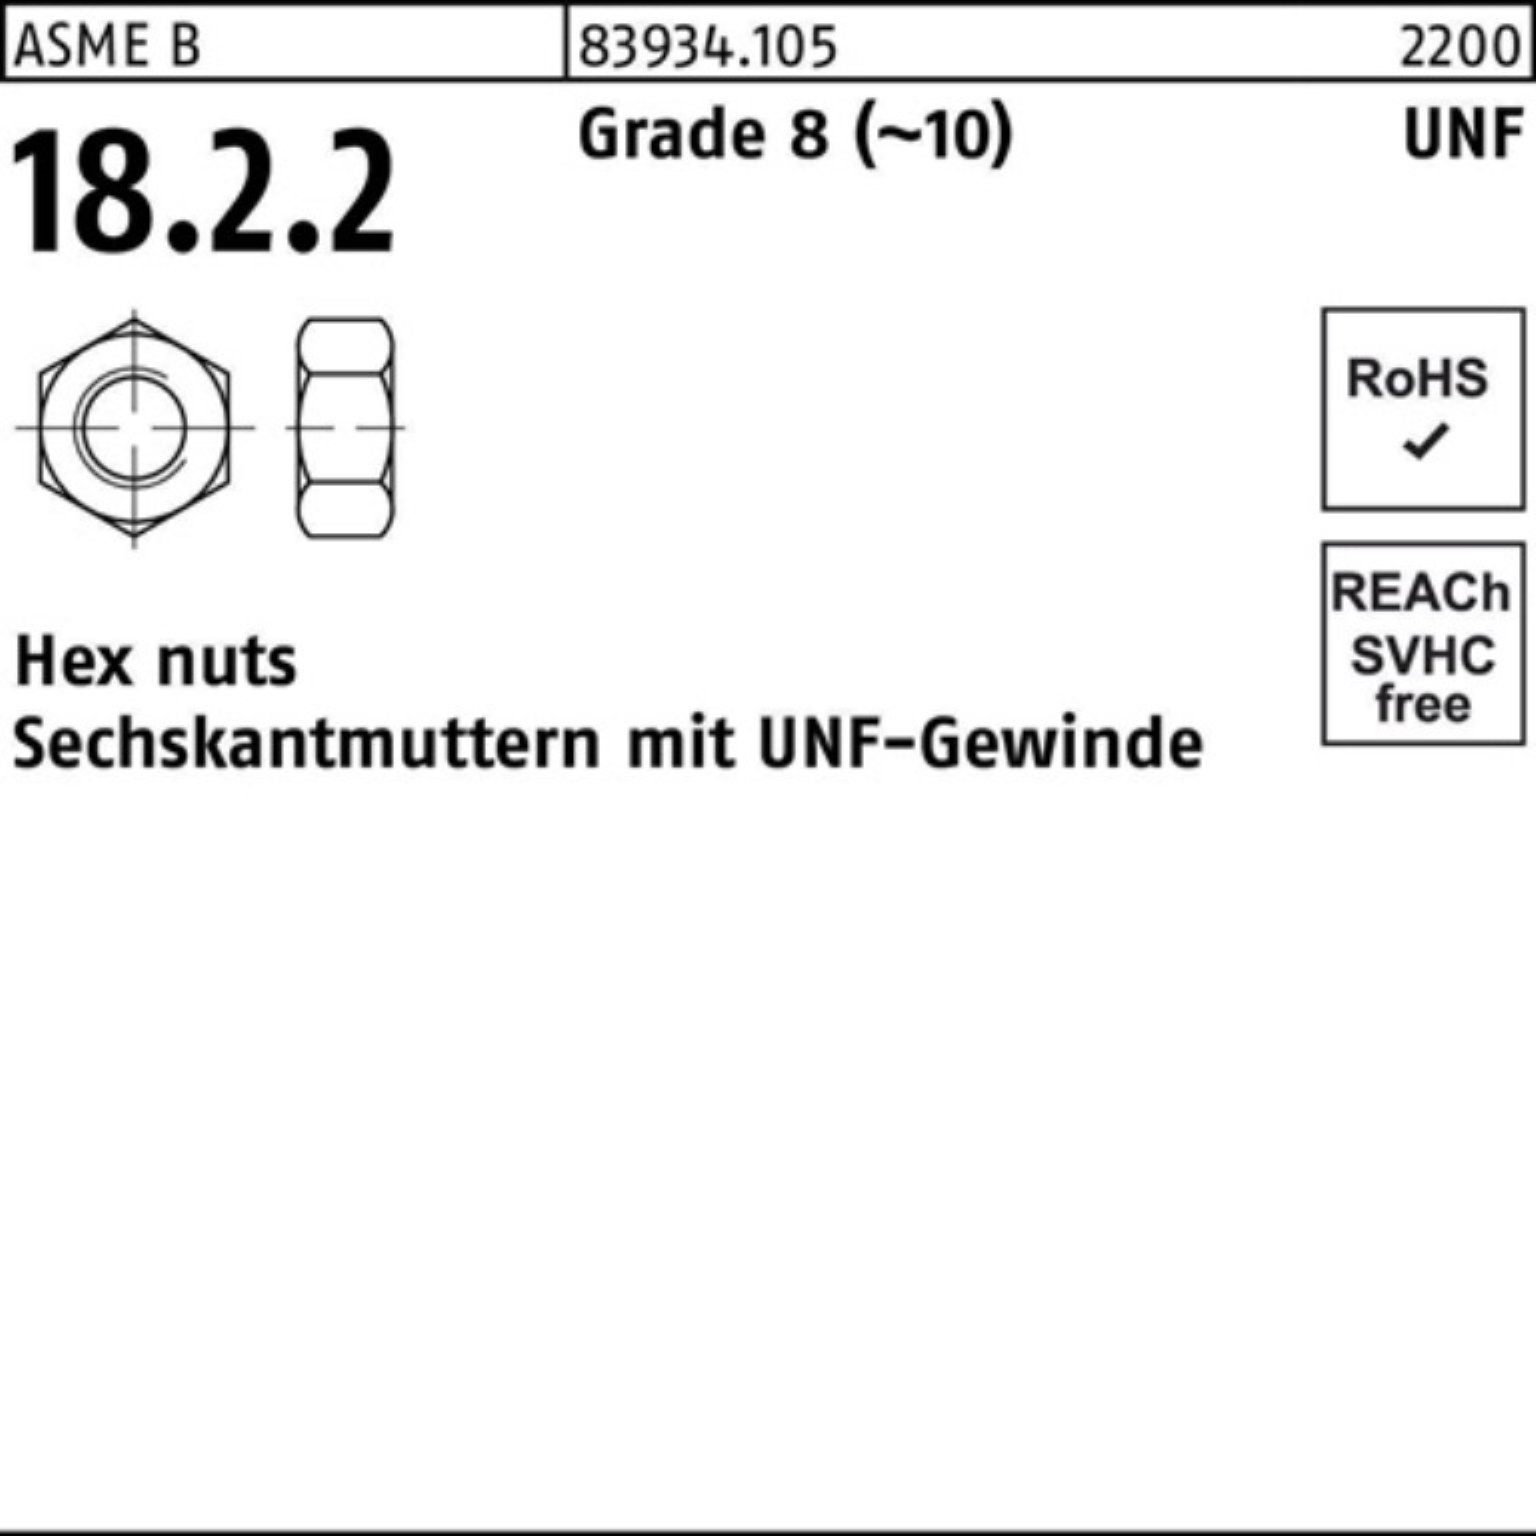 Reyher Muttern 8 (10) Grade 7/8 Sechskantmutter 100er Pack St 25 83934 R UNF-Gewinde